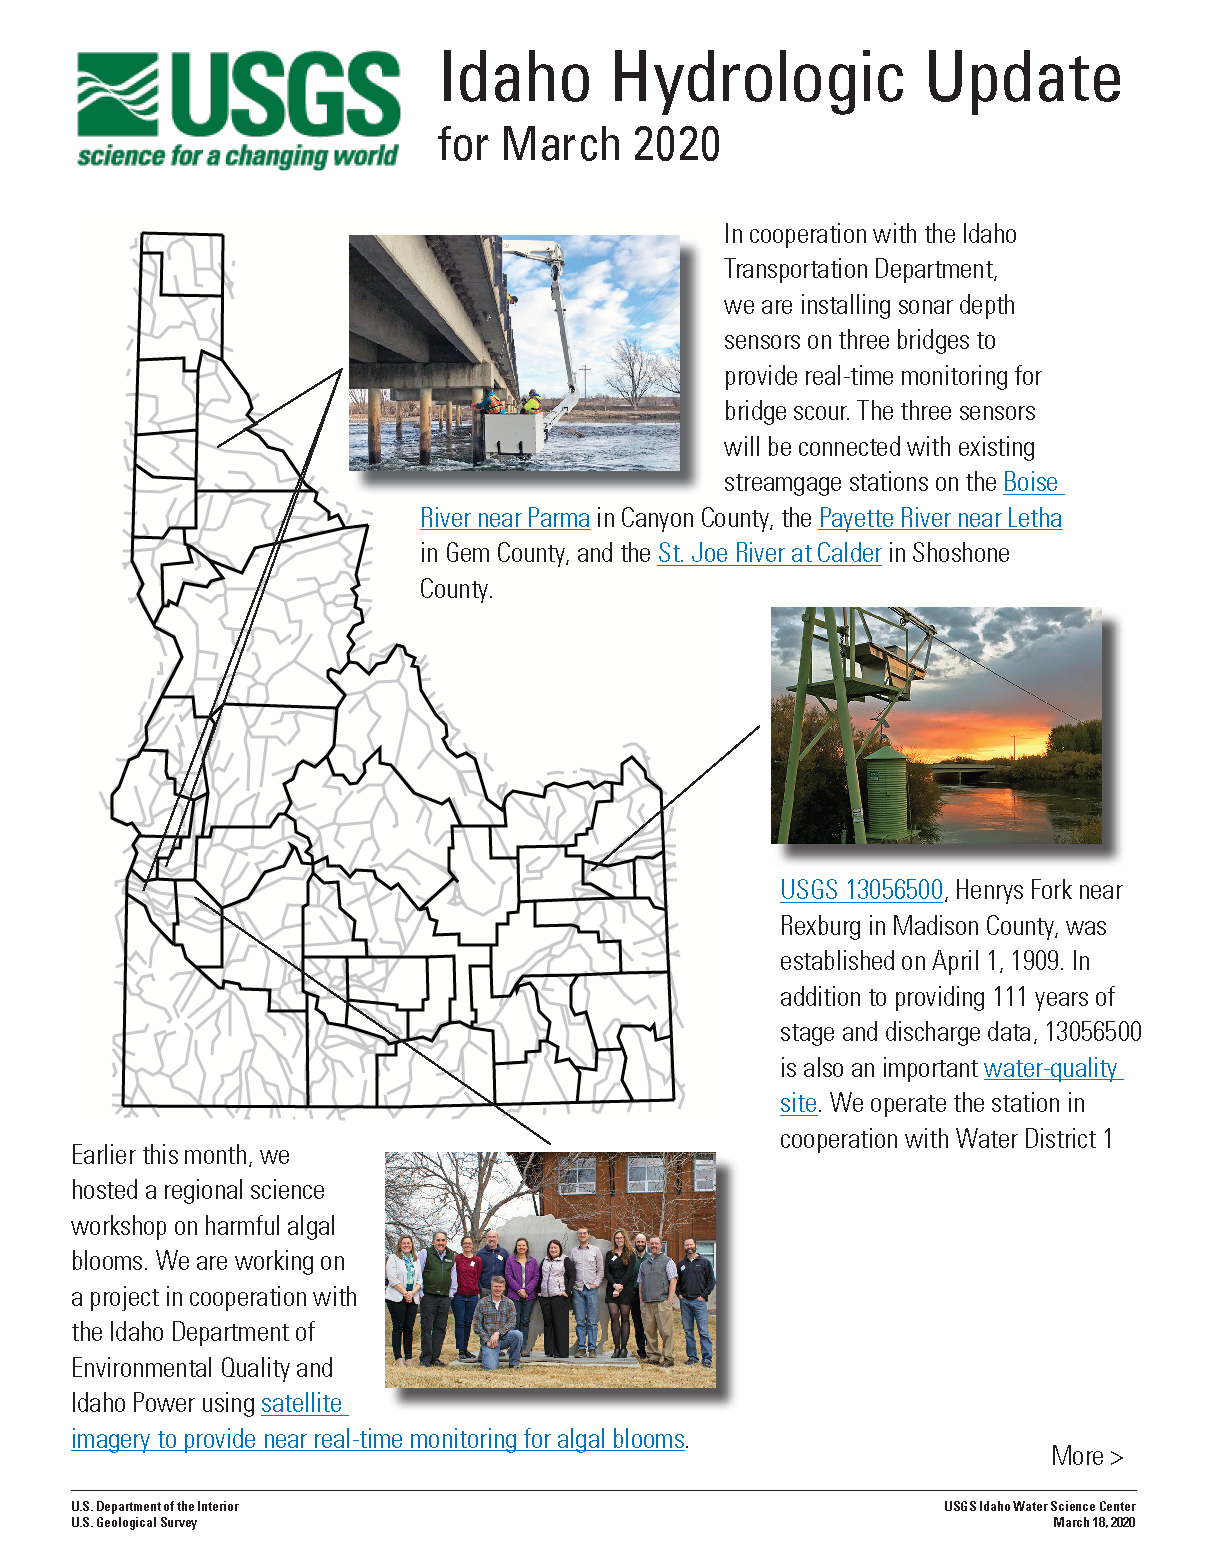 Idaho Hydrologic Update, March 2020